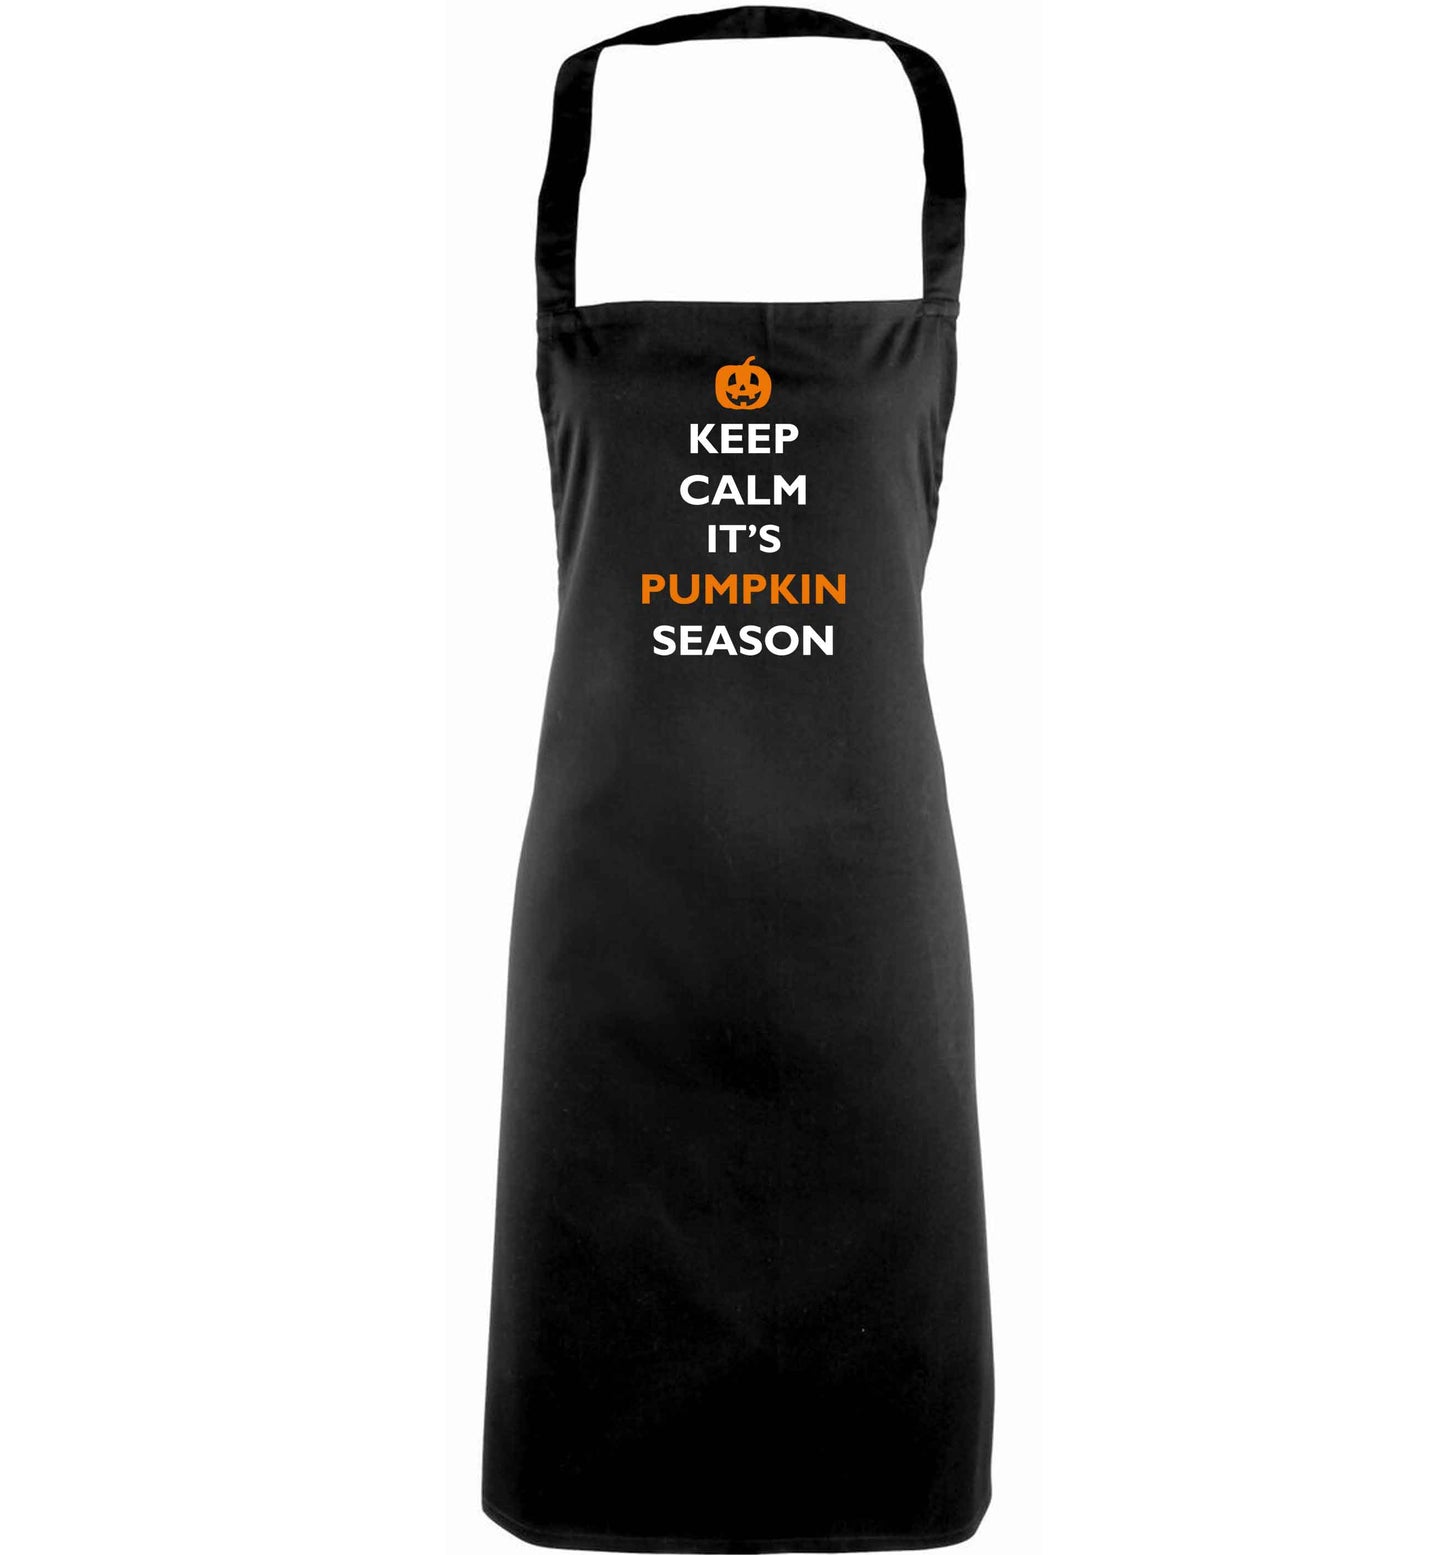 Calm Pumpkin Season adults black apron